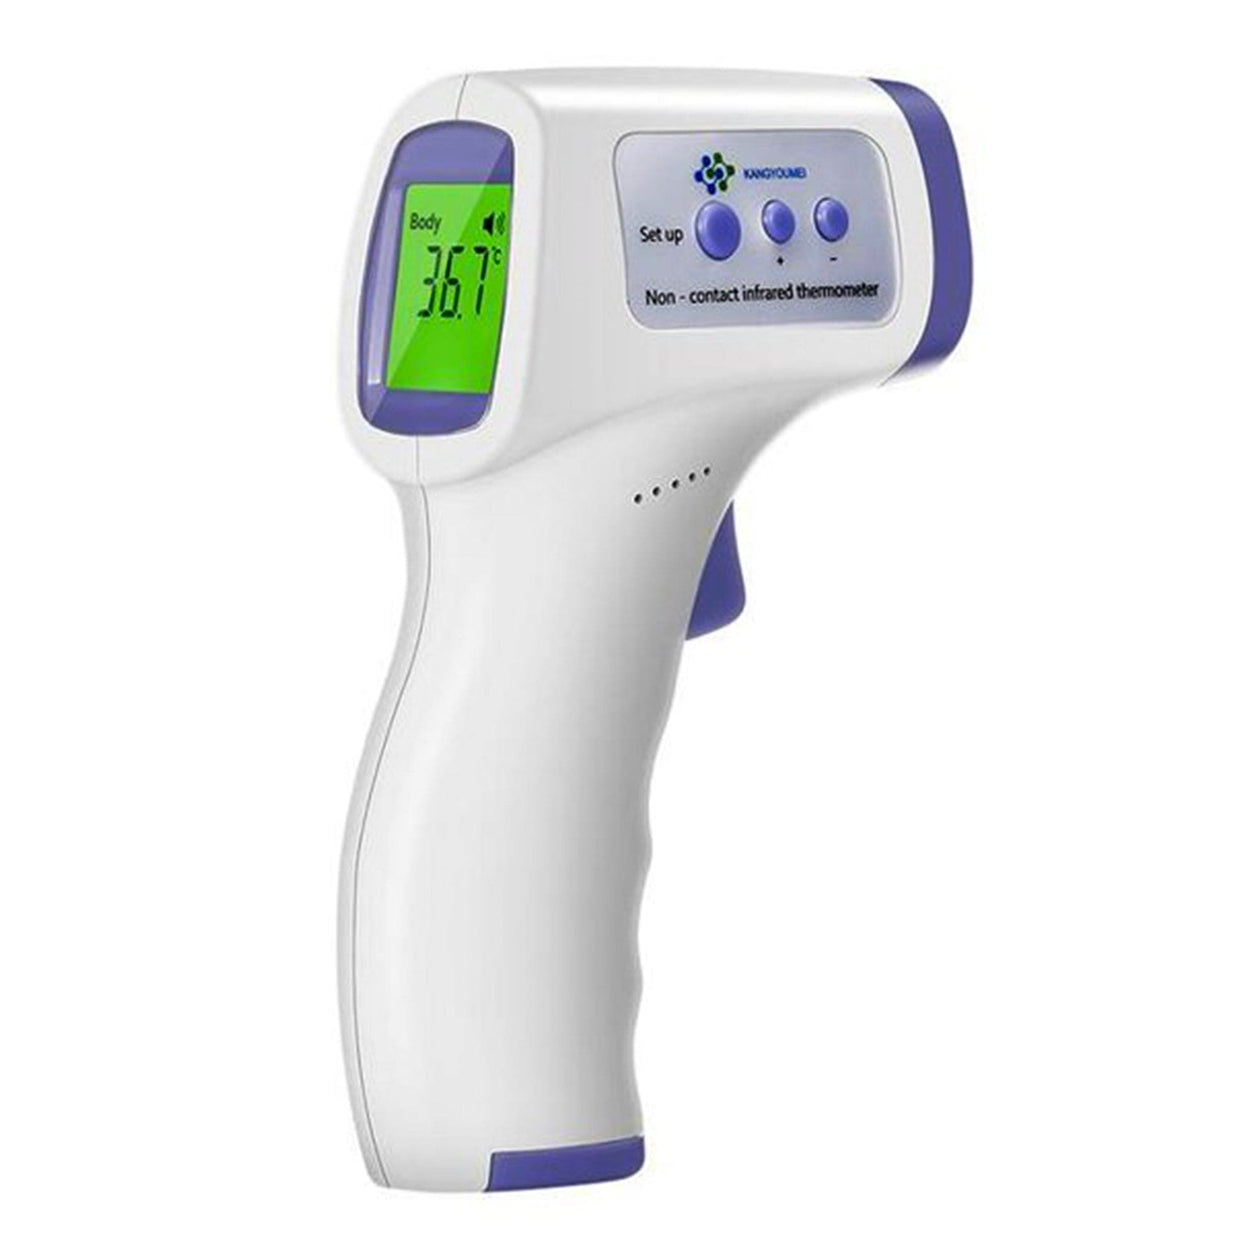 Laser Temperature Gun - Non-Contact Thermometer